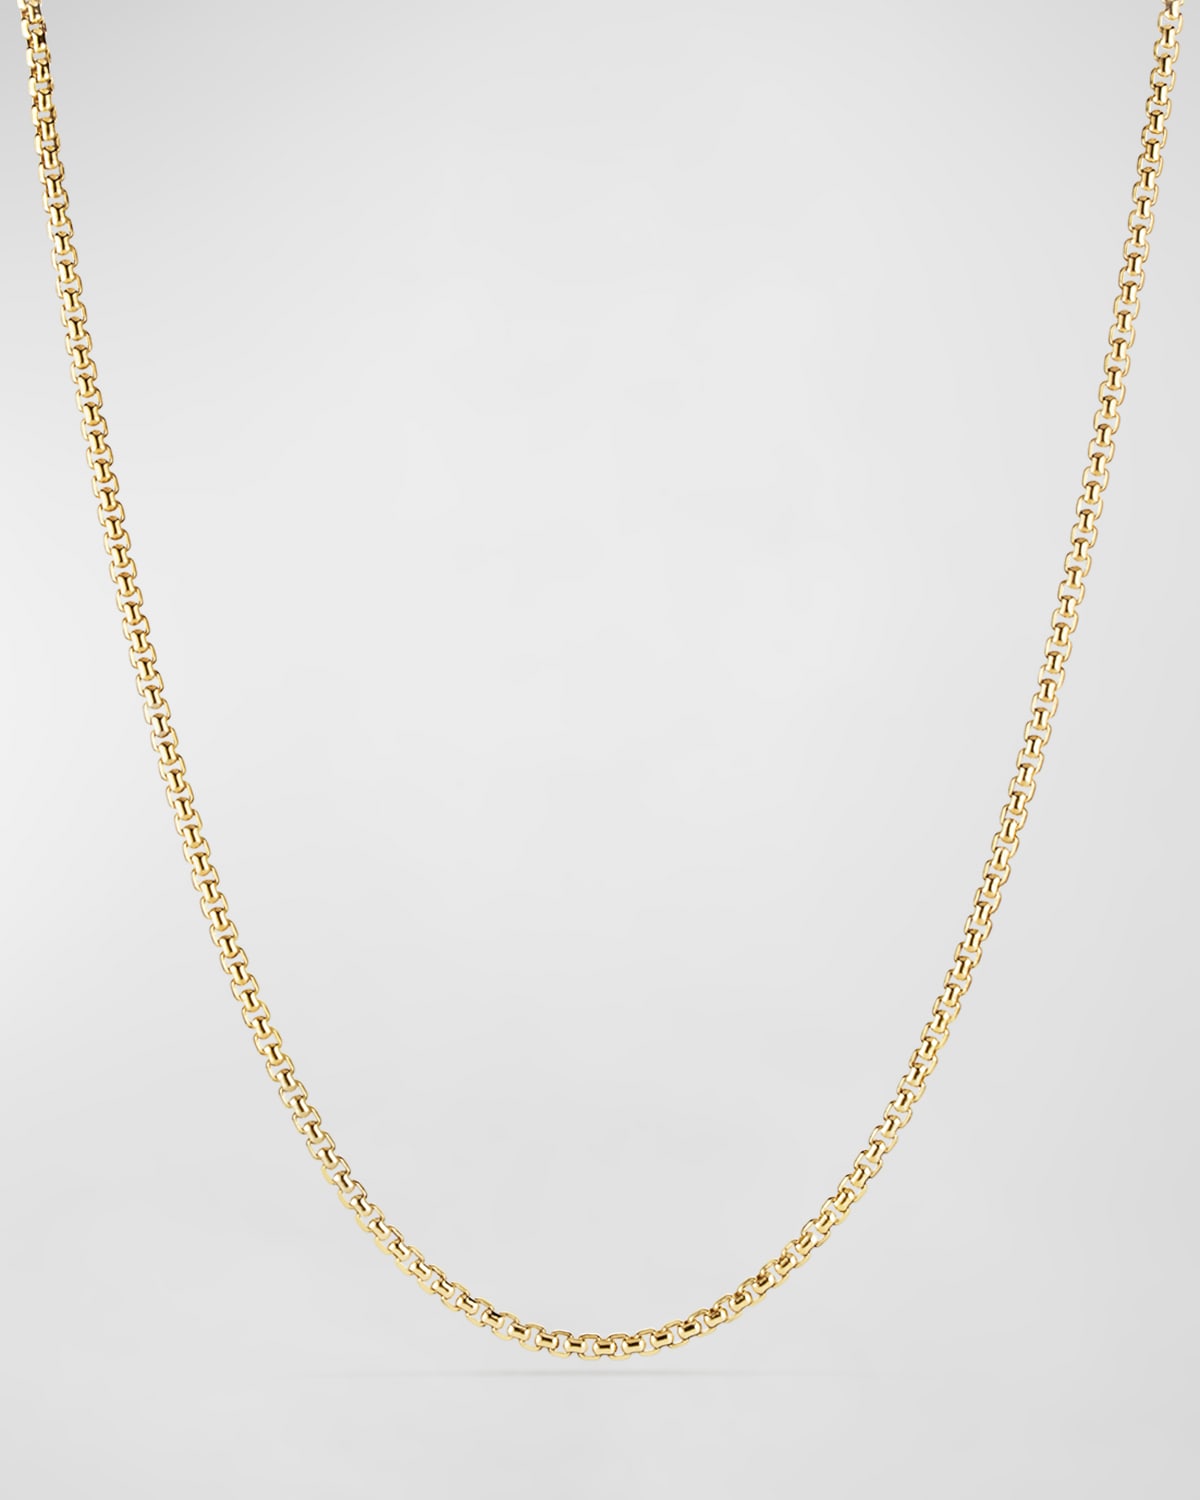 David Yurman Men's Medium Box Chain Necklace In 18k Gold, 26"